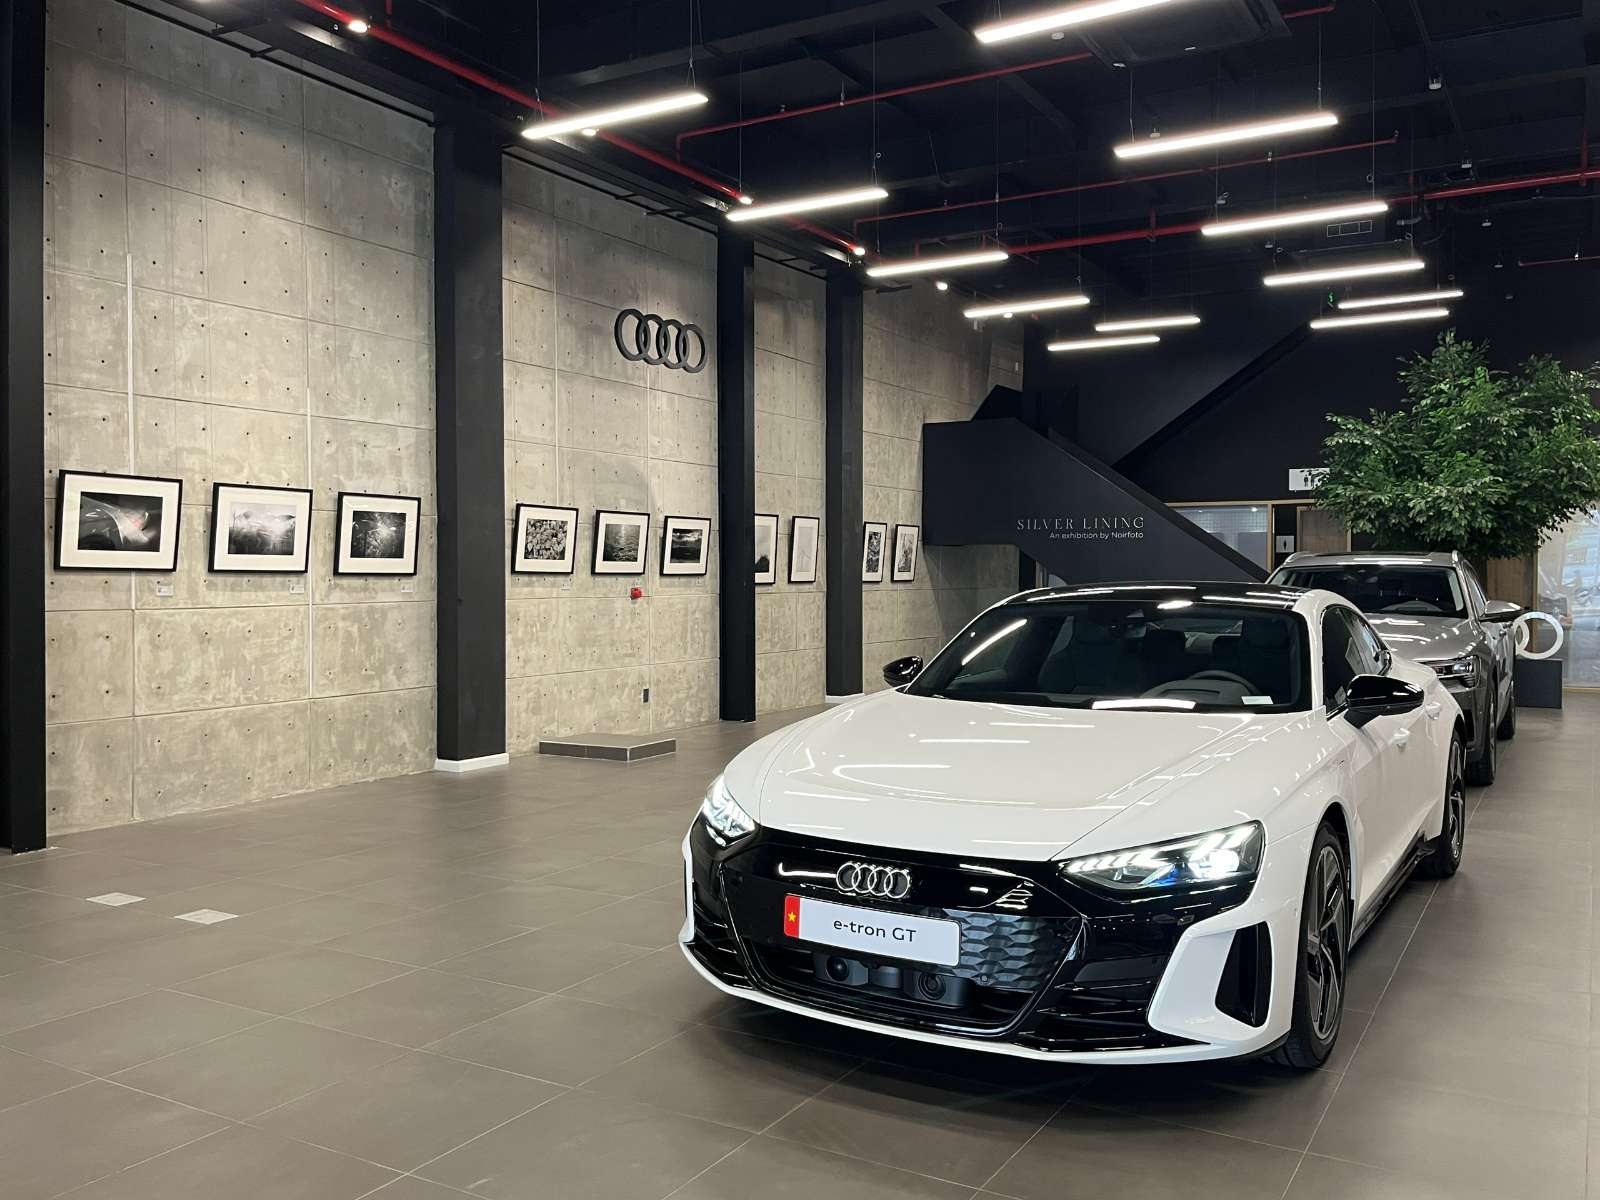 Audi Charging Lounge, Audi Vietnam, Silver Lining, The Grapevine Selection, triển lãm ảnh